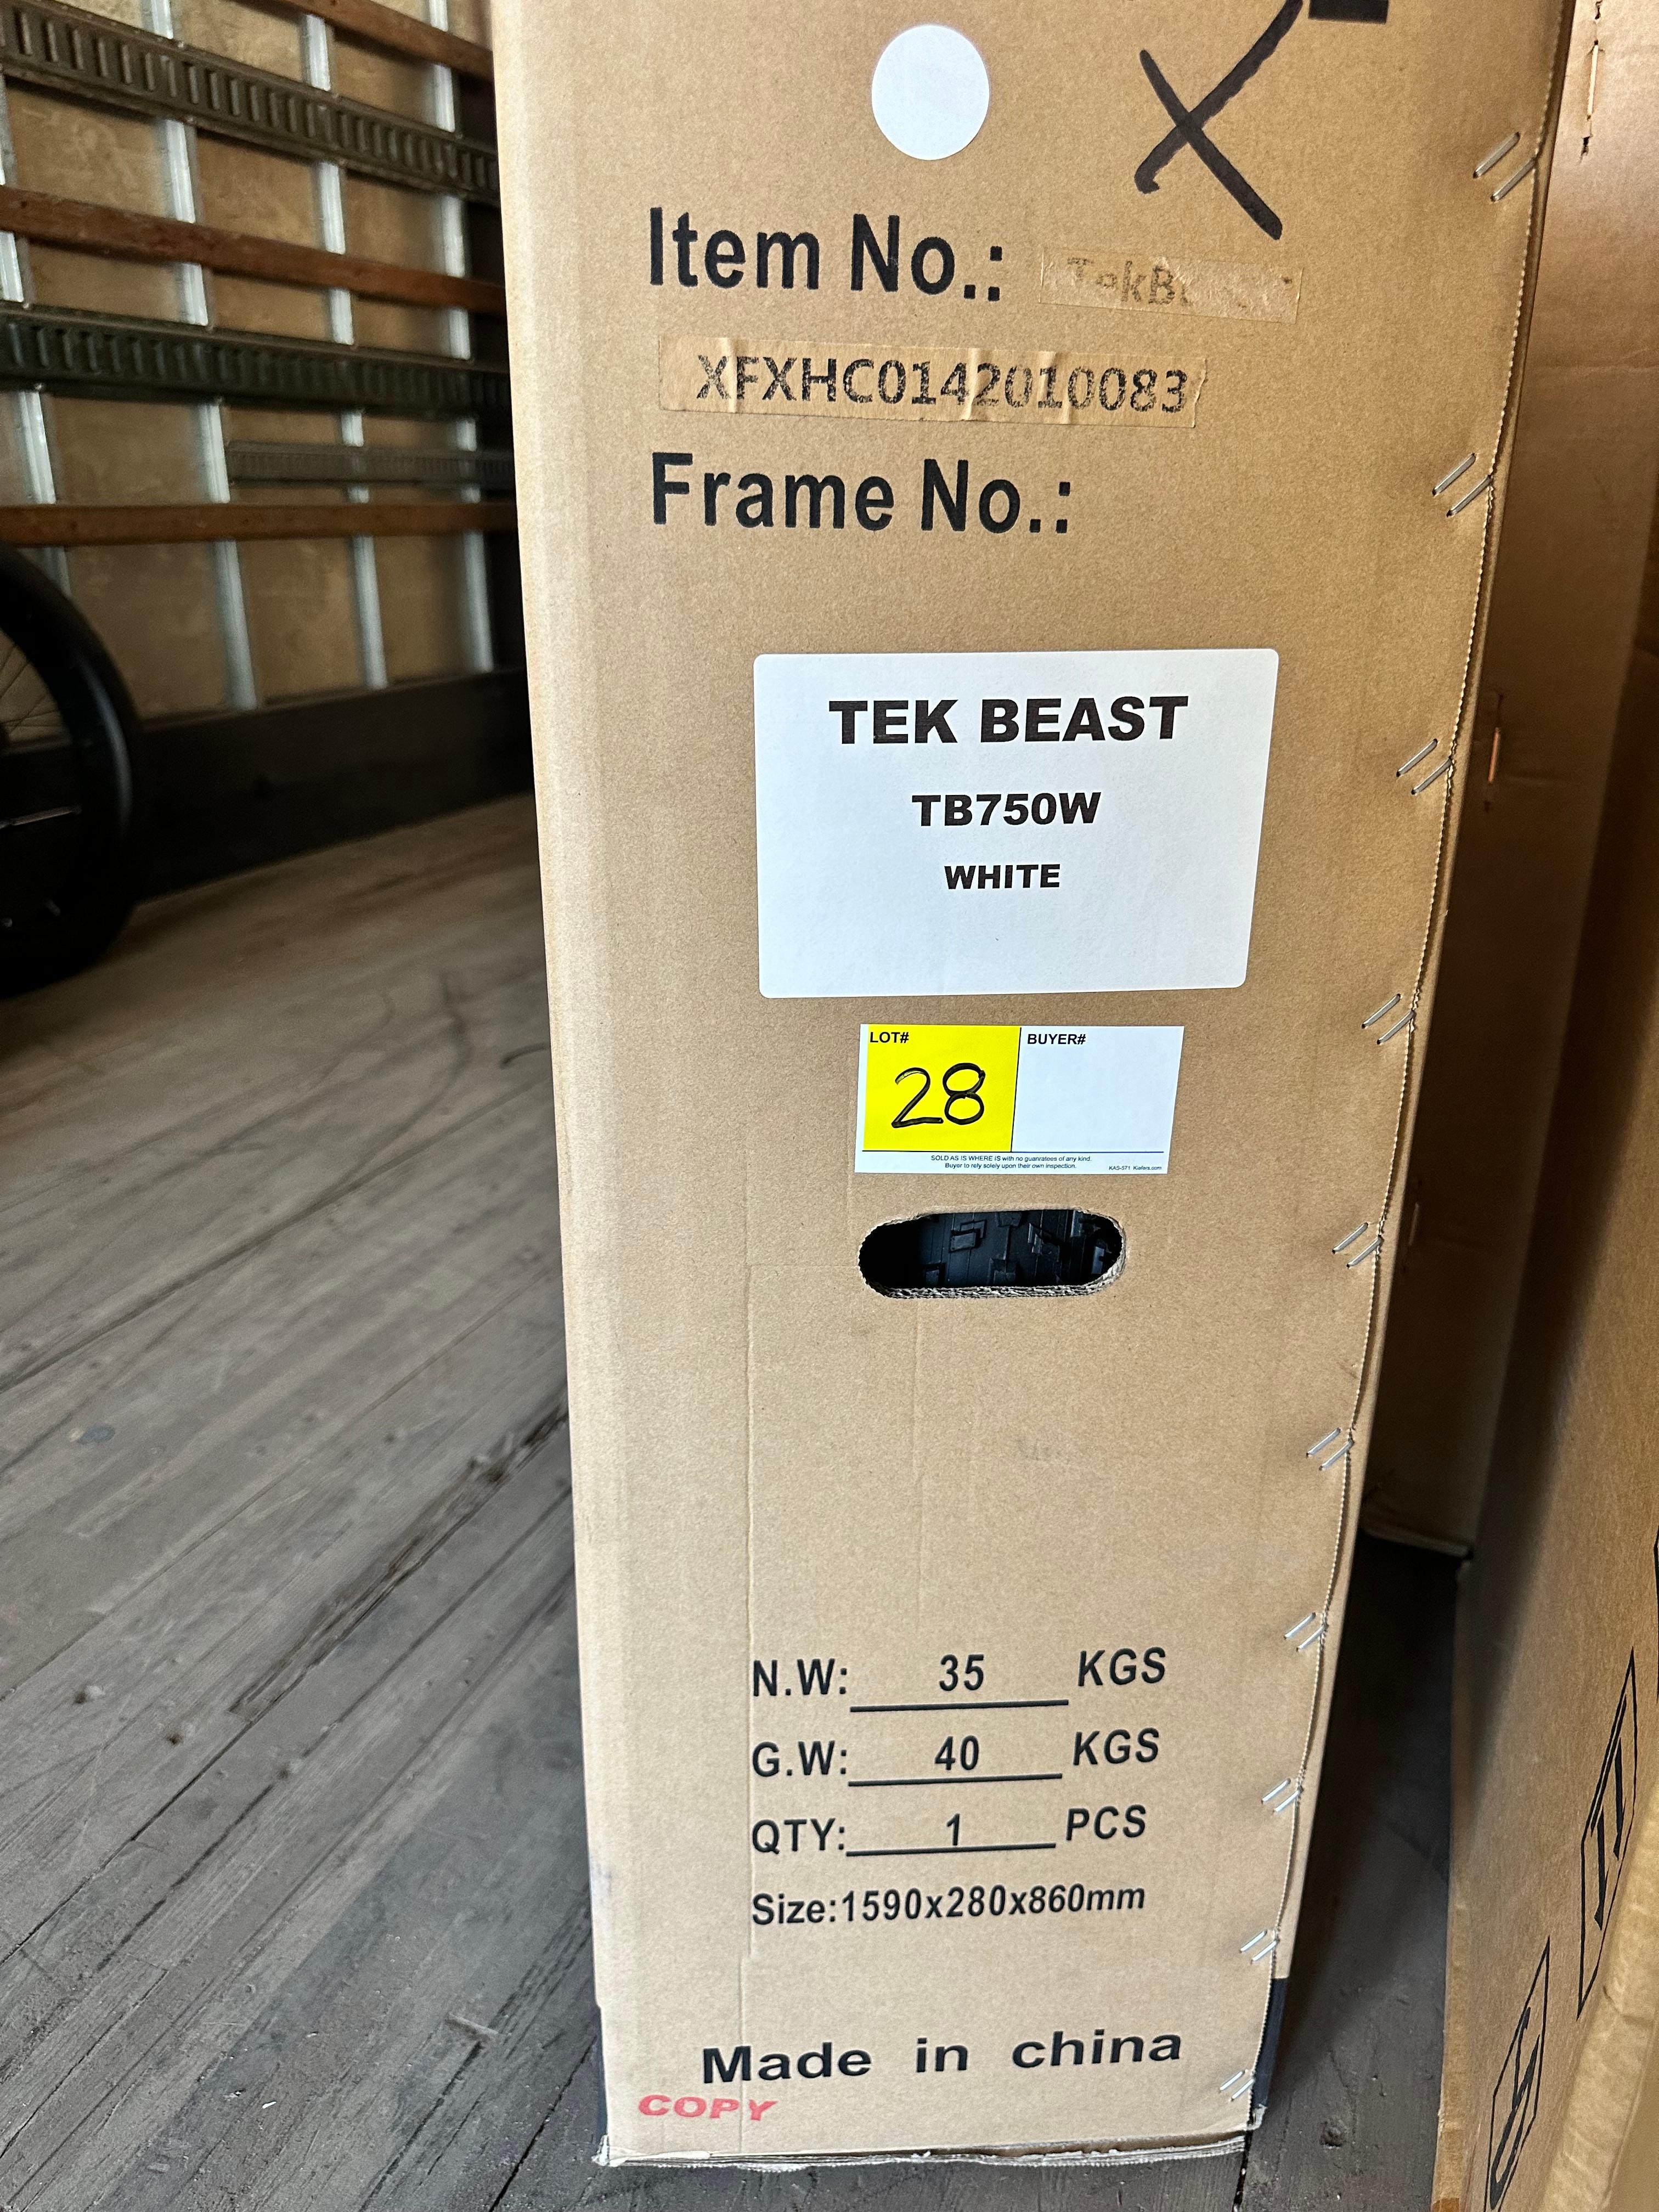 E - TEK BEAST, MODEL: TB750W, COLOR WHITE